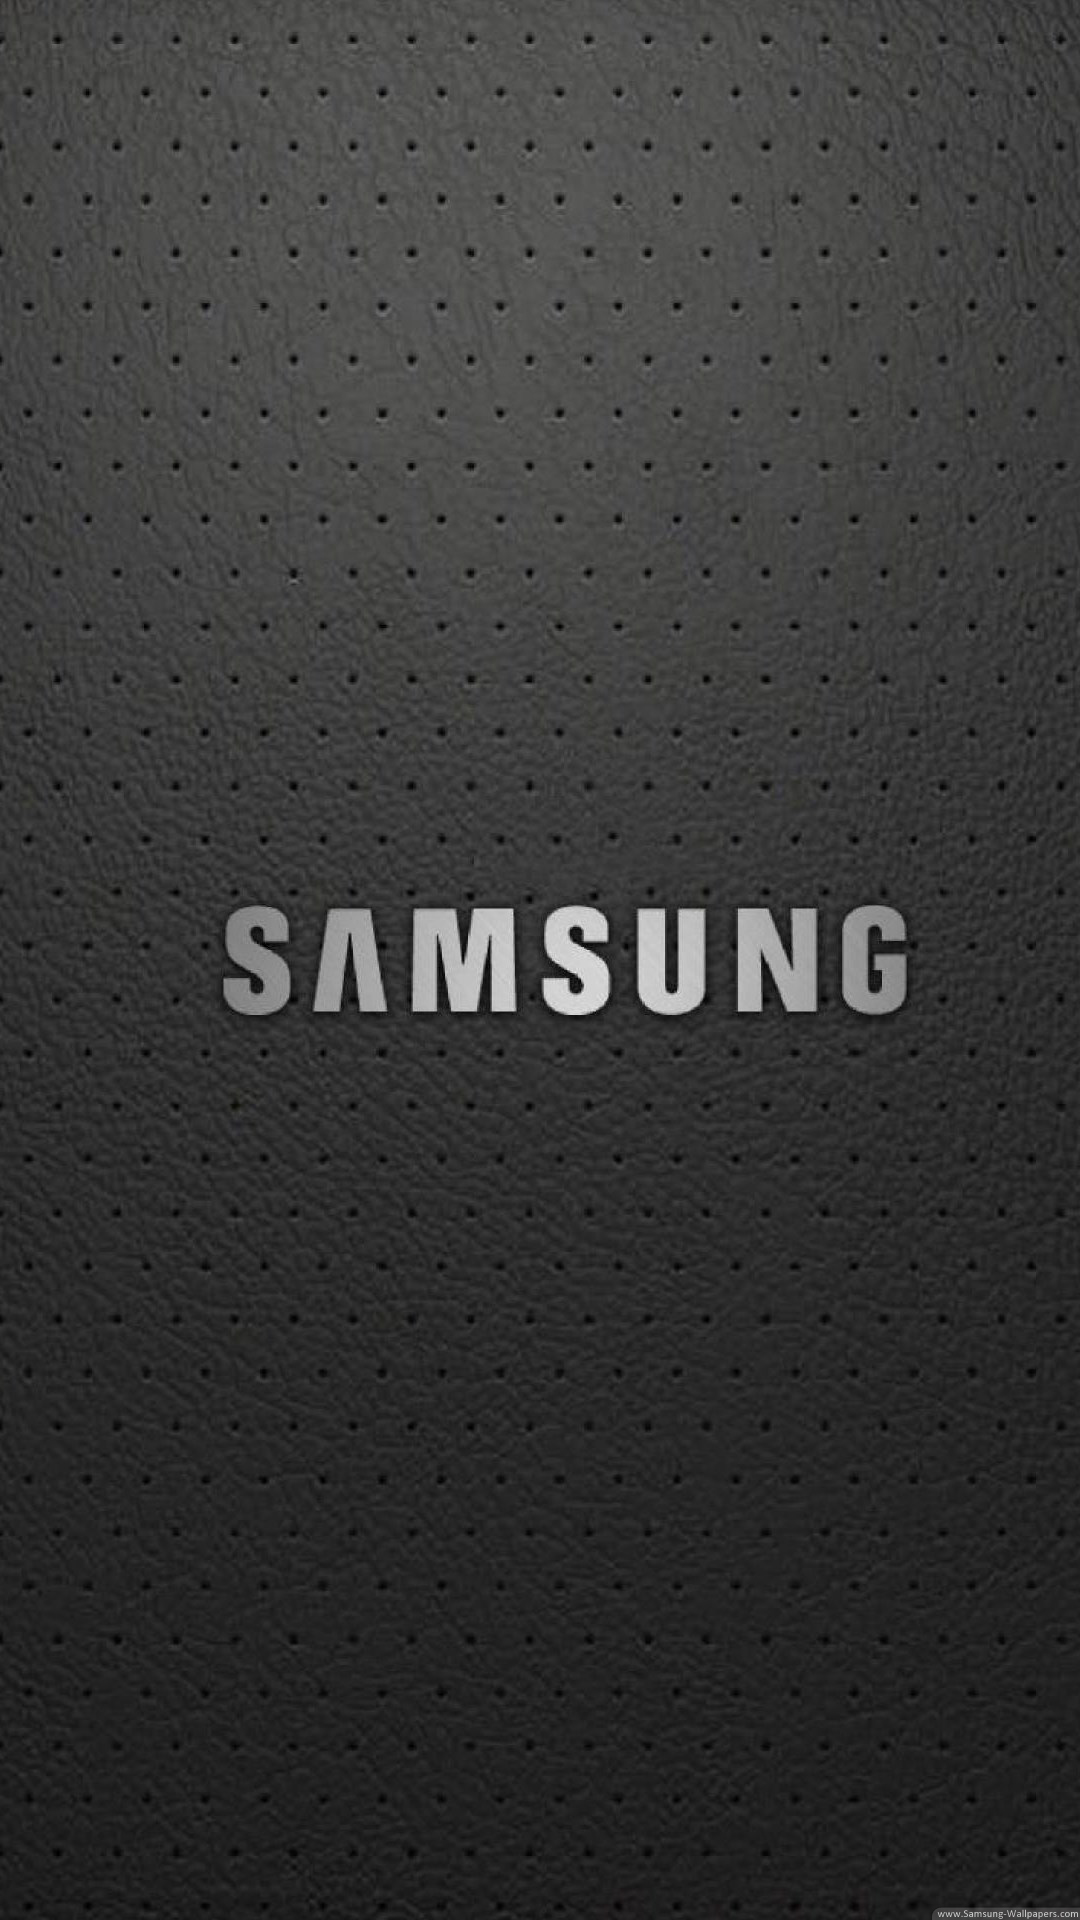 Samsung Logo Background Lock Screen Galaxy S4